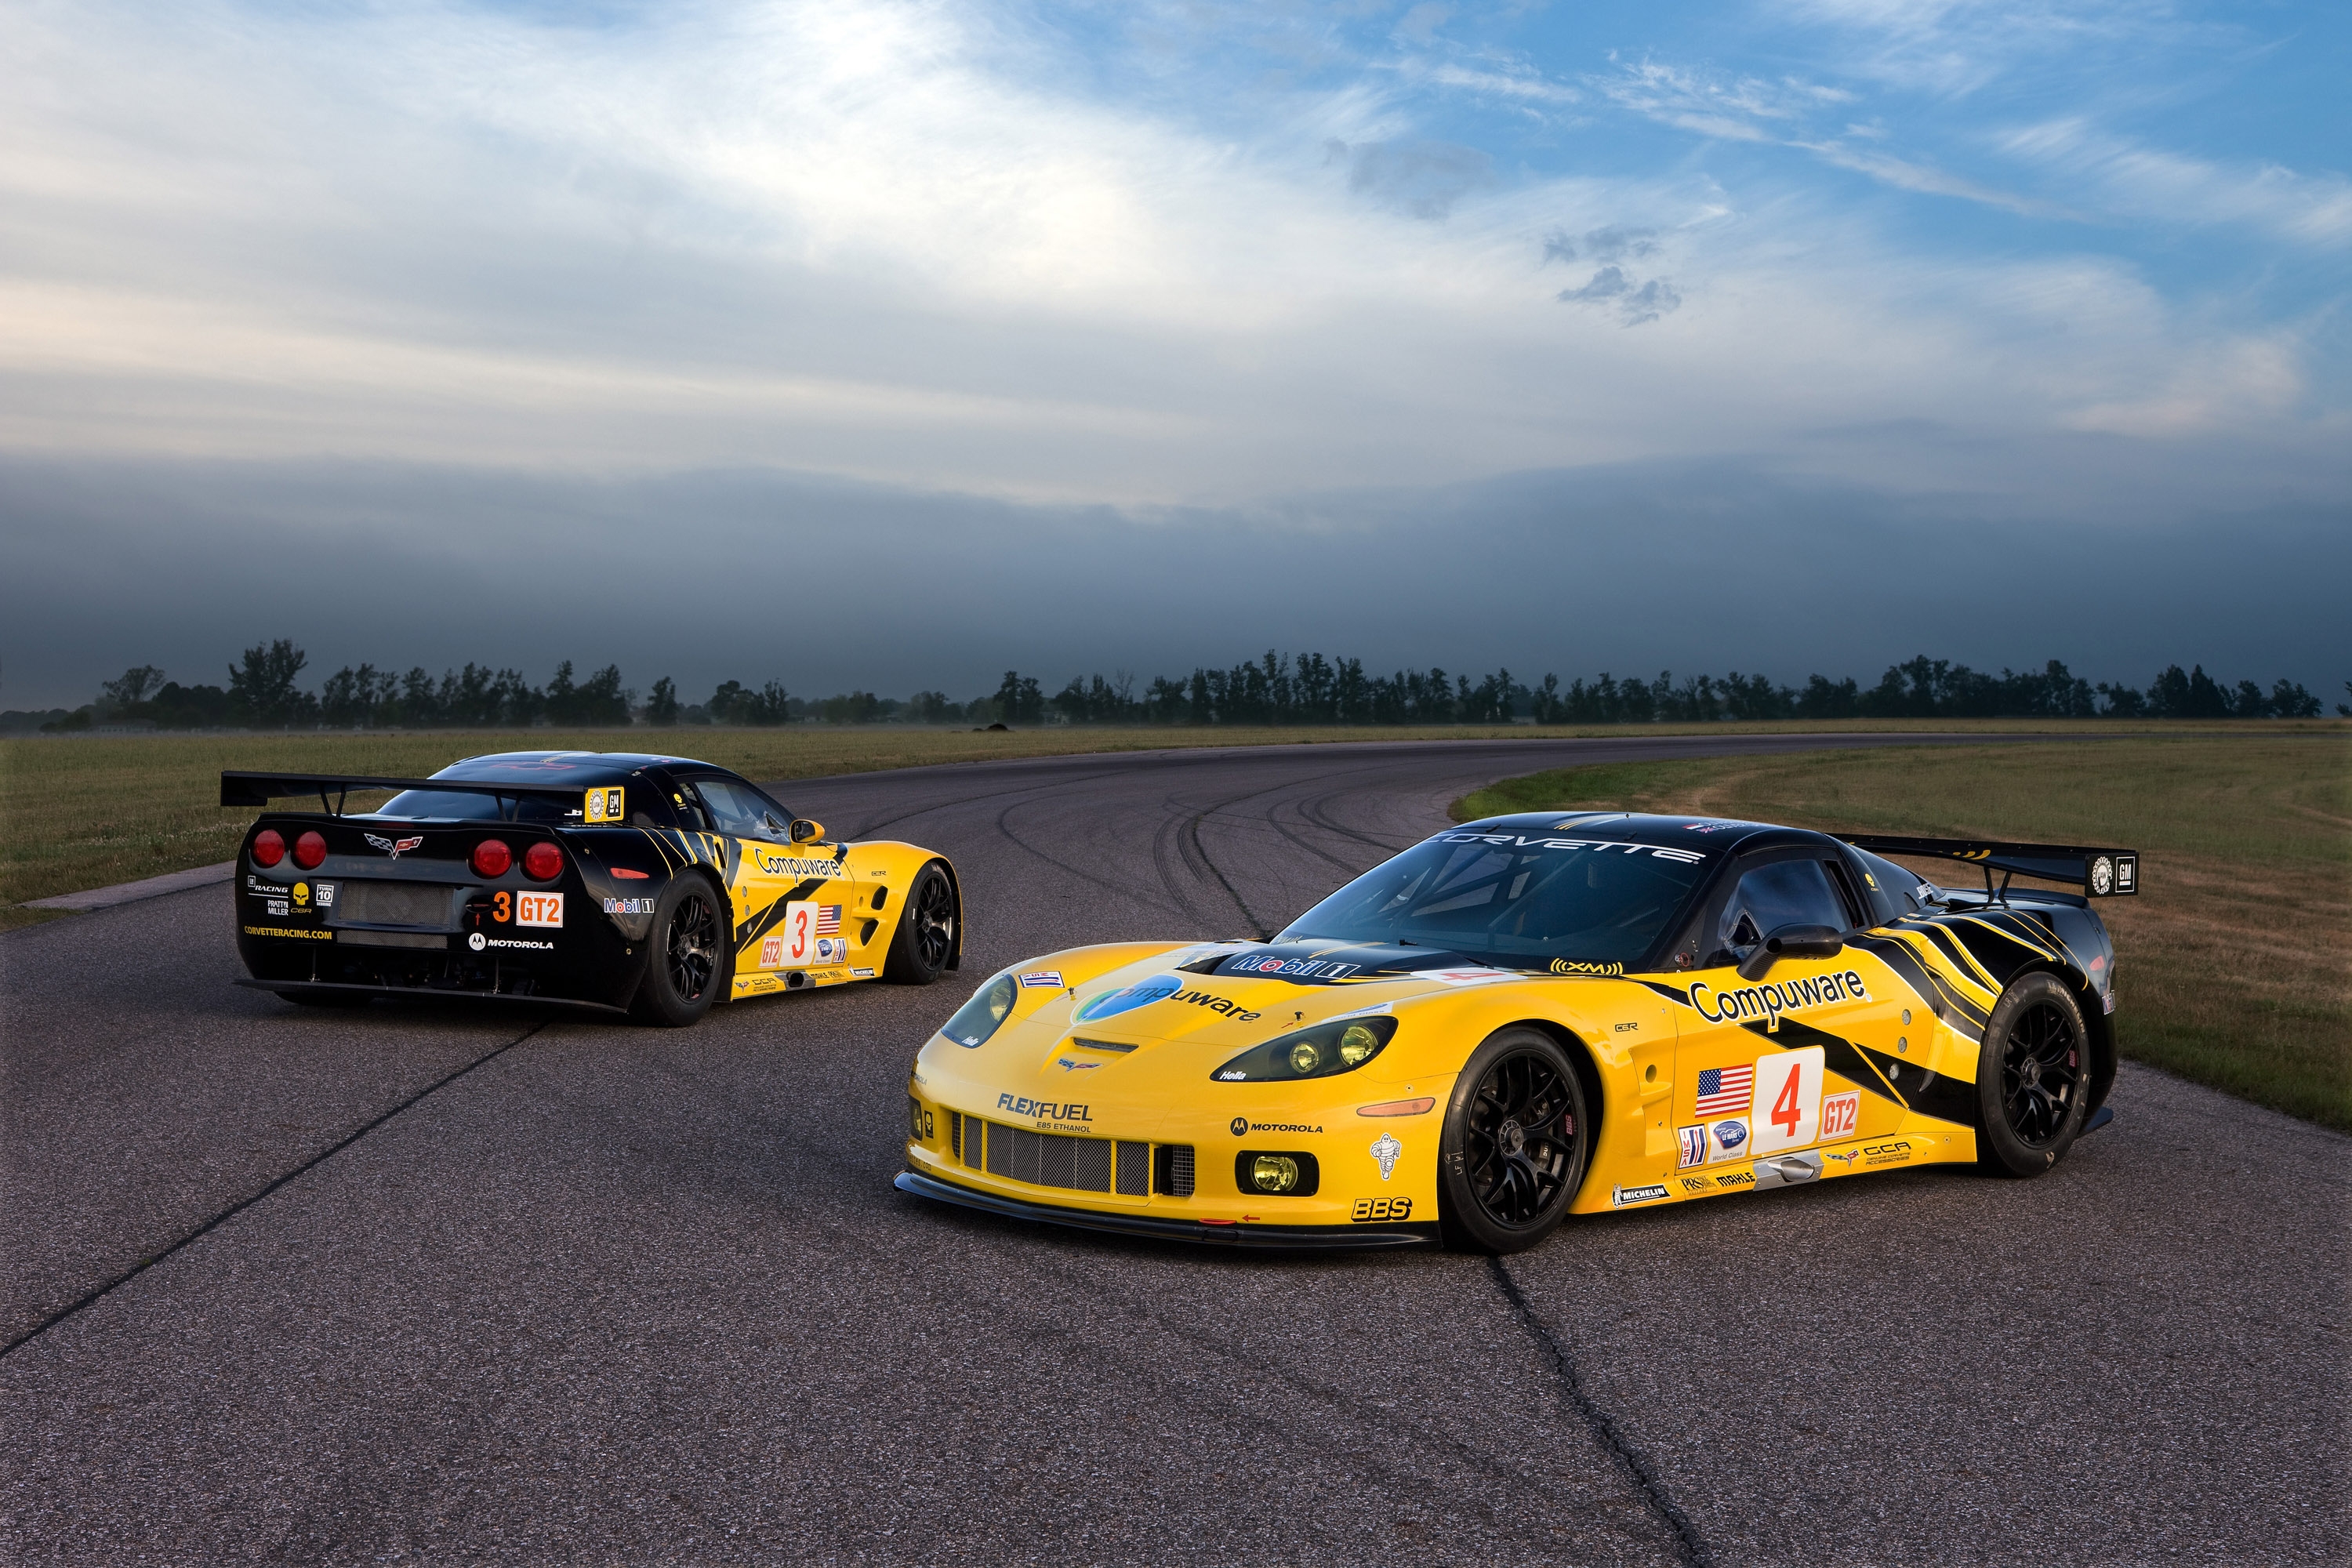 Corvette in motion: A sleek, powerful vehicle speeding on the road.